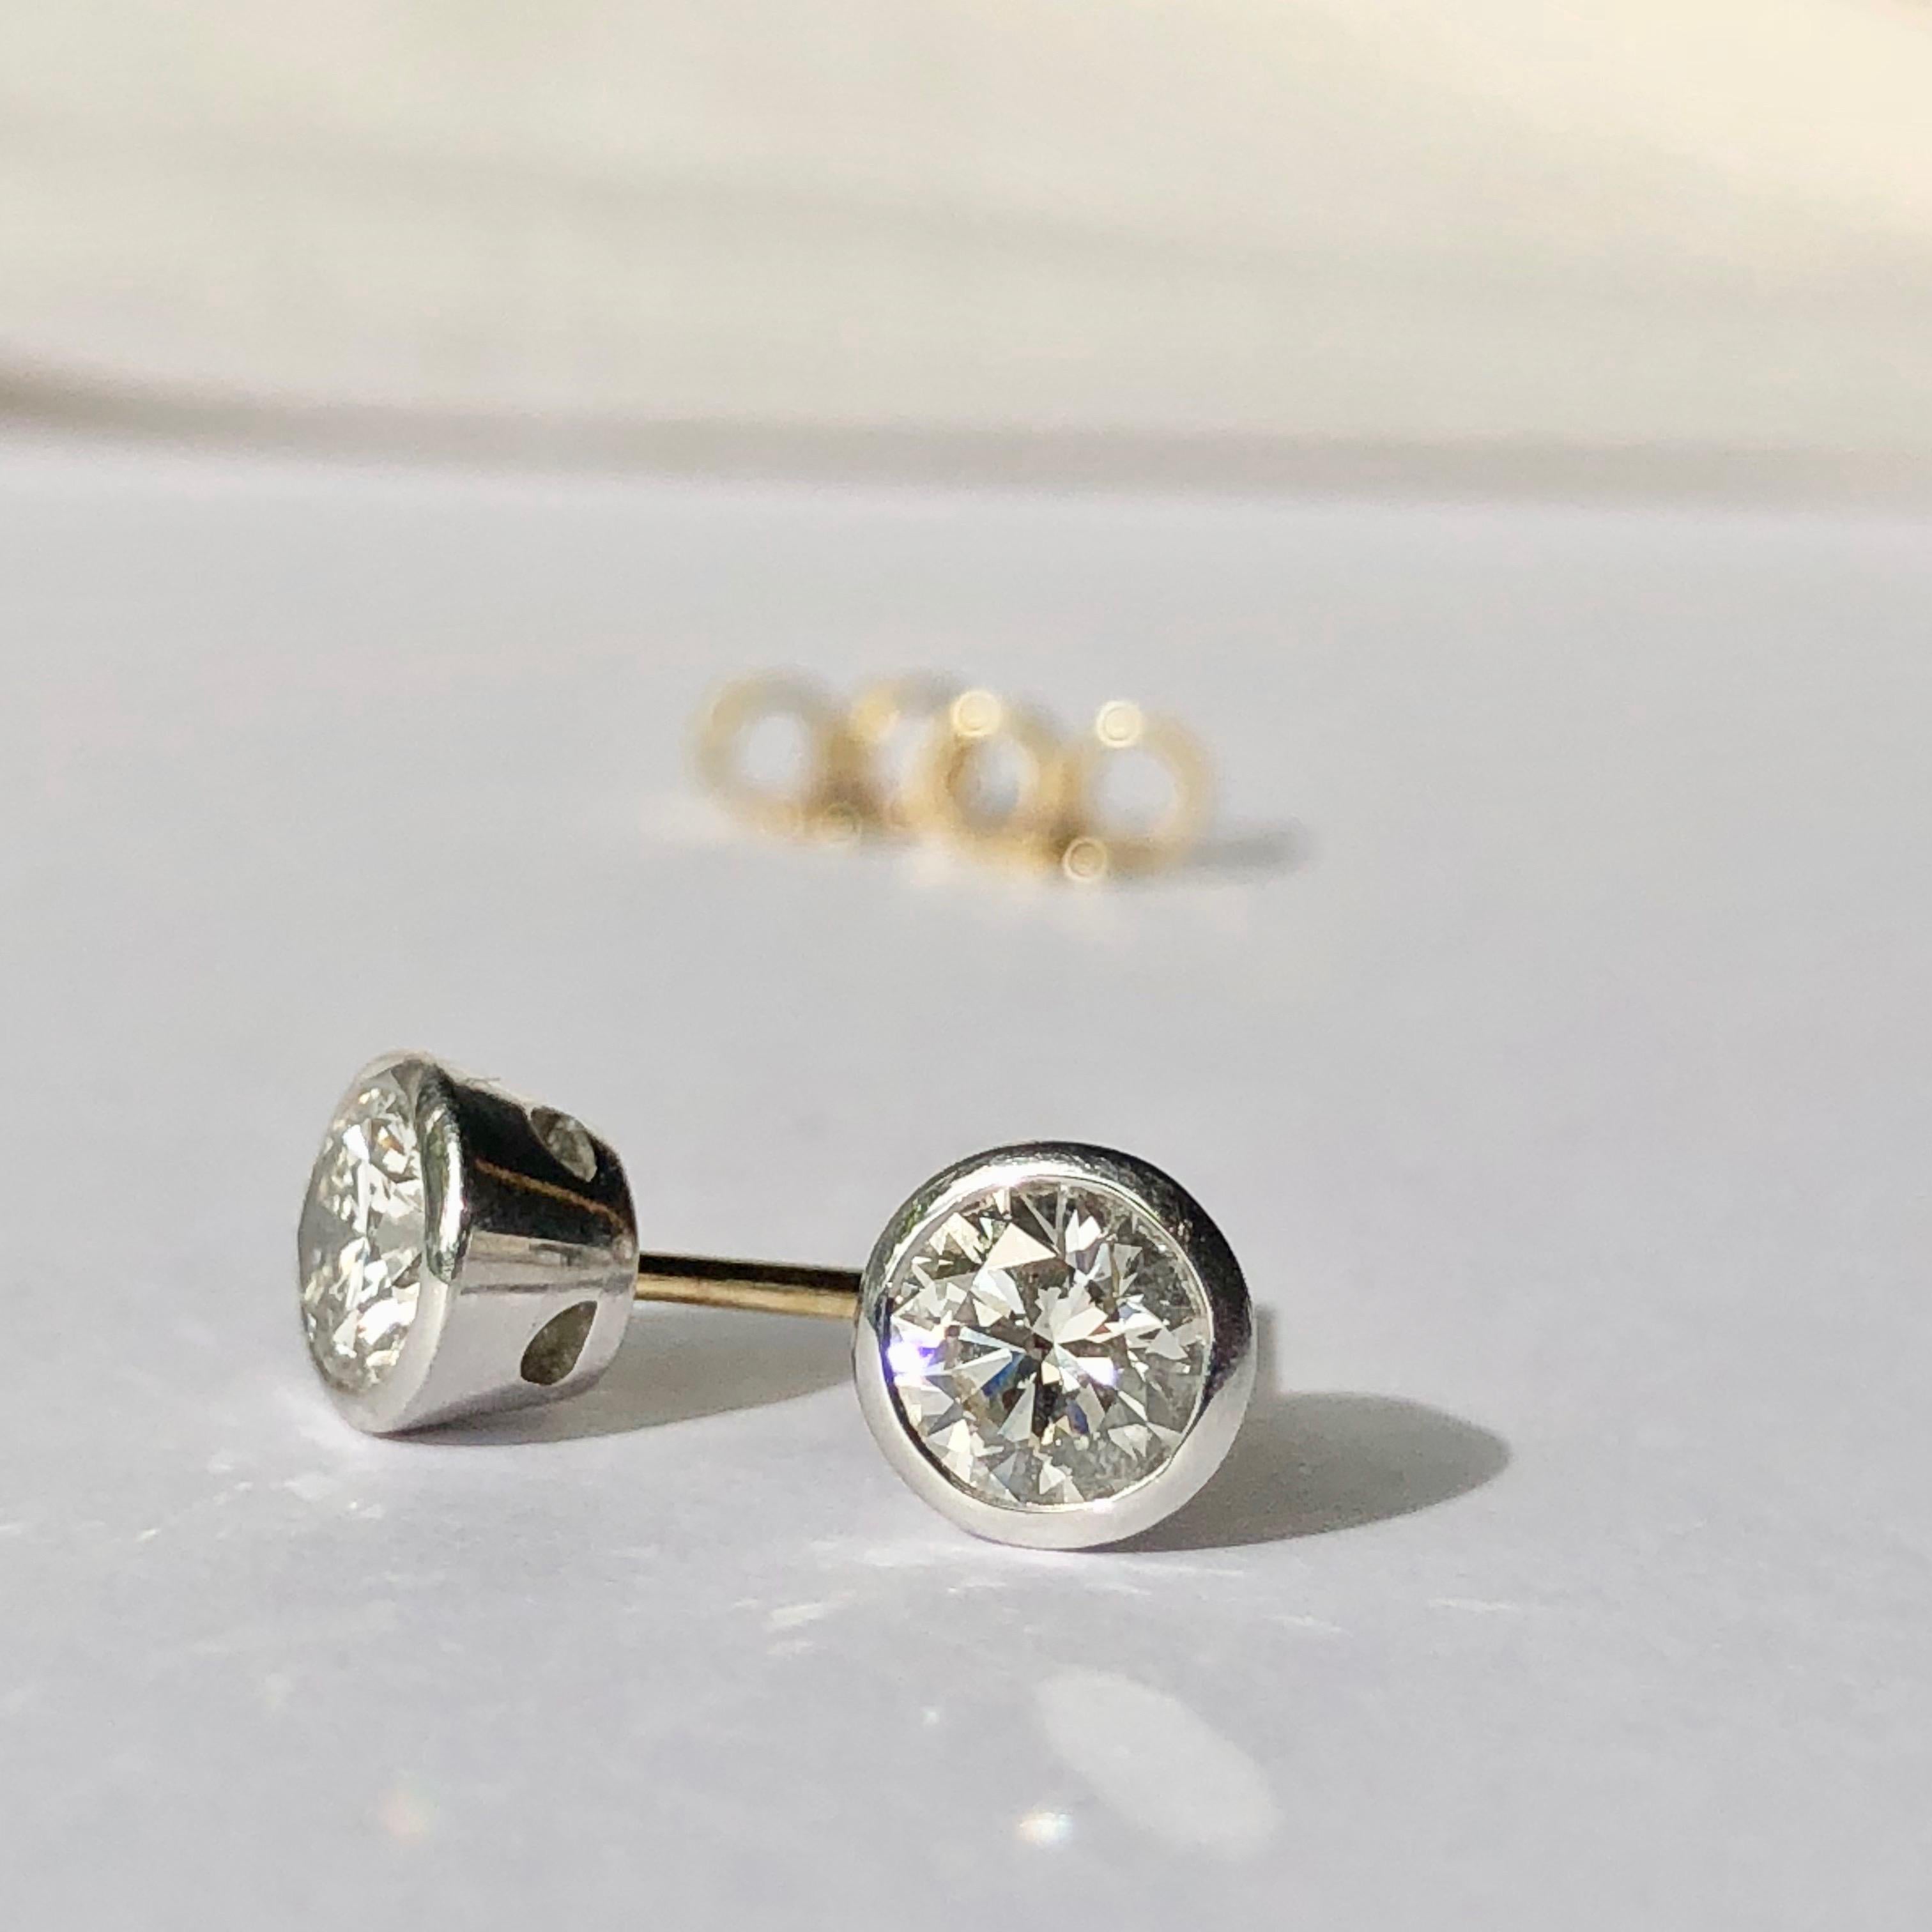 Round Cut White Diamond Earrings Studs Single Stone Round Brilliant Cut Solitaire 18k Gold